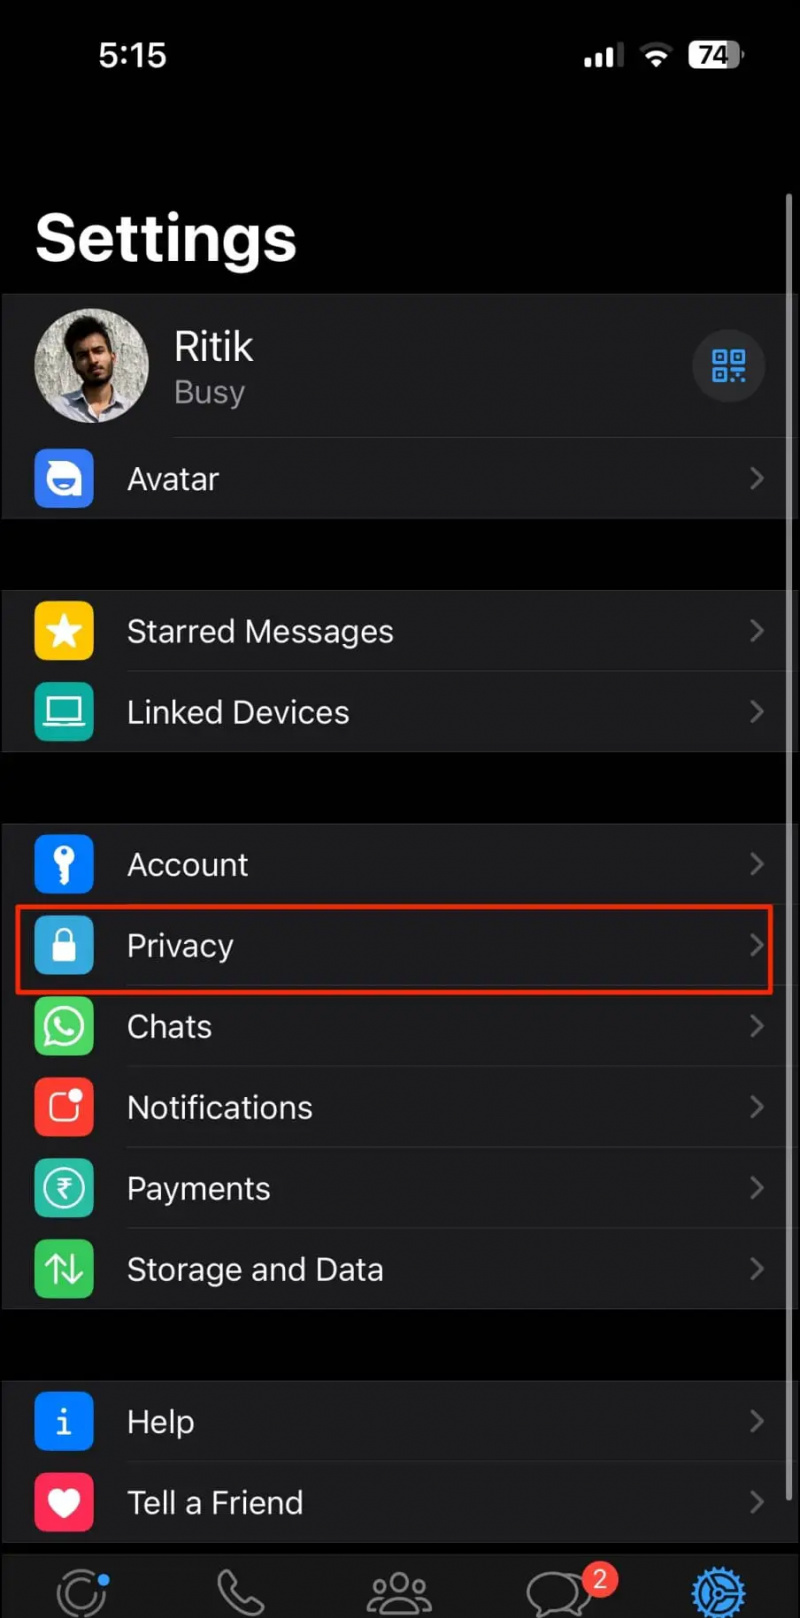   Blocca l'app WhatsApp su iPhone